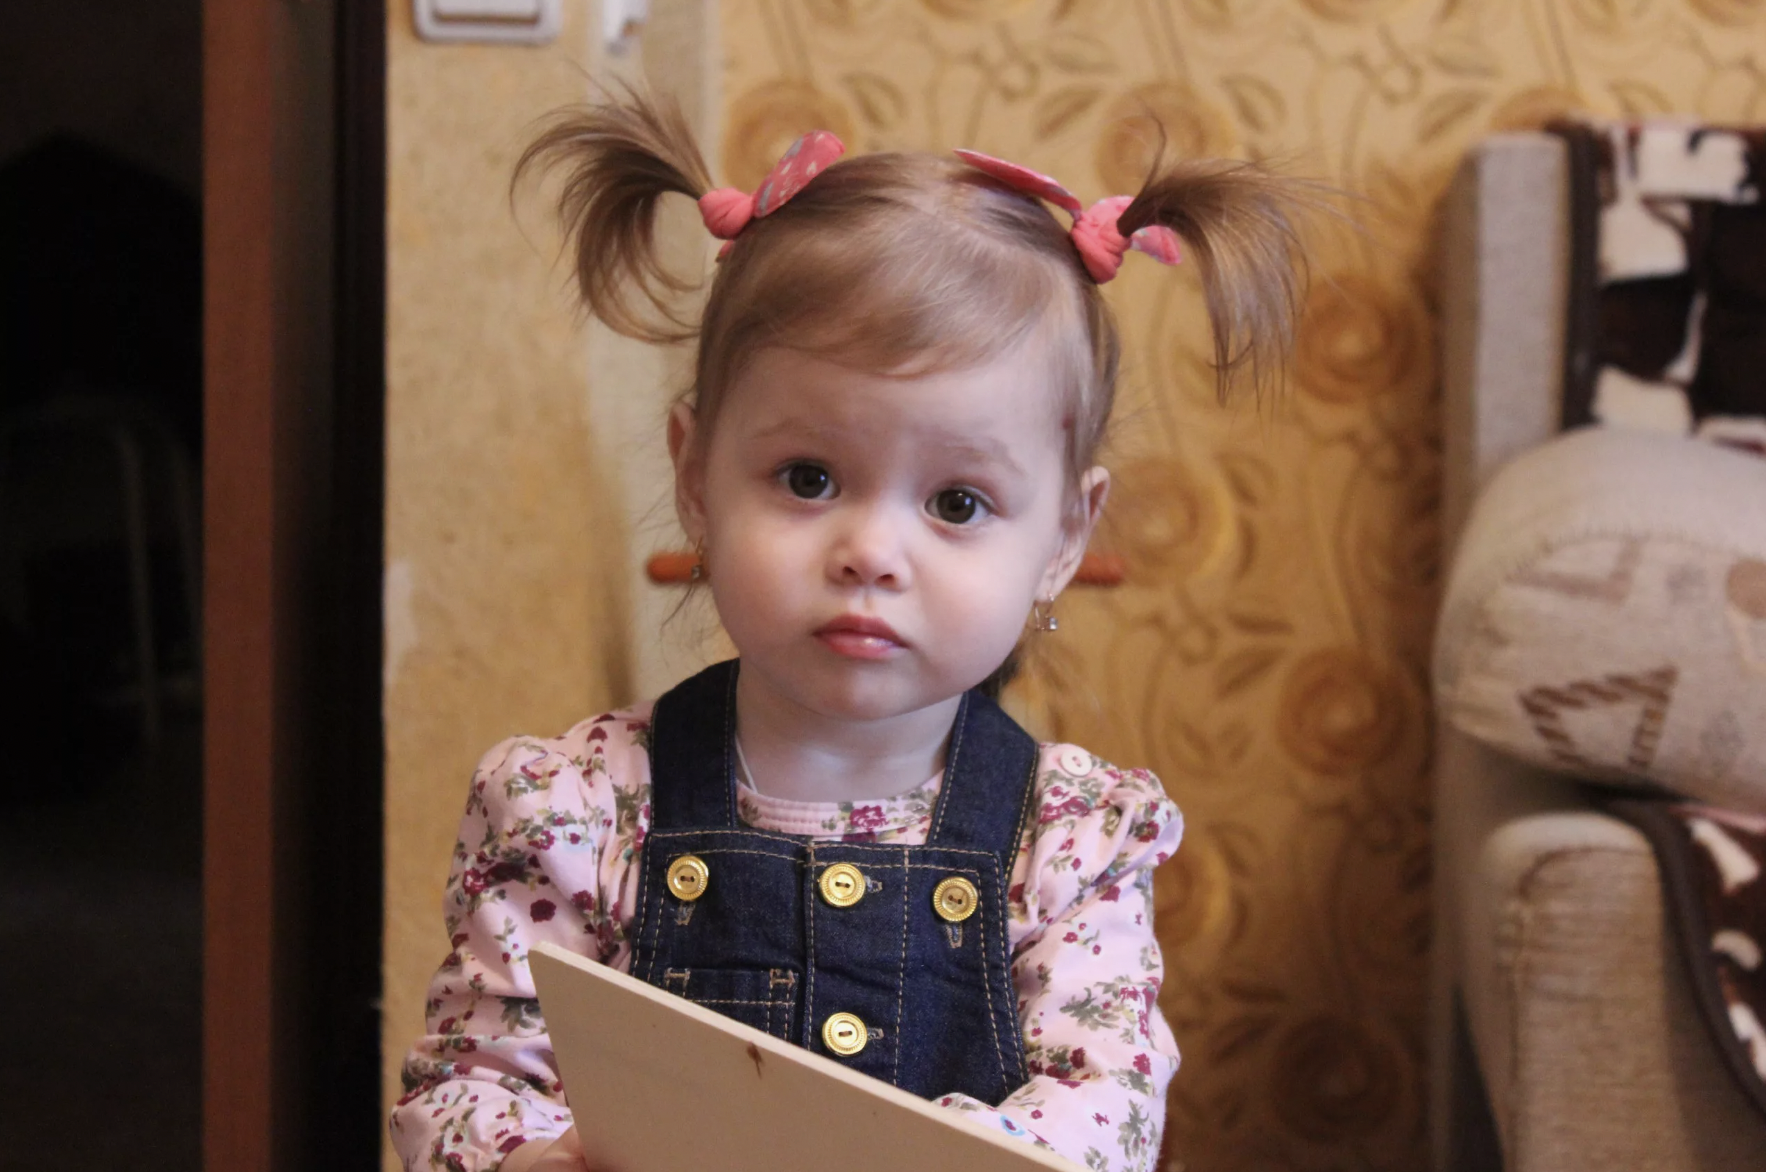 Little girl | Source: Shutterstock